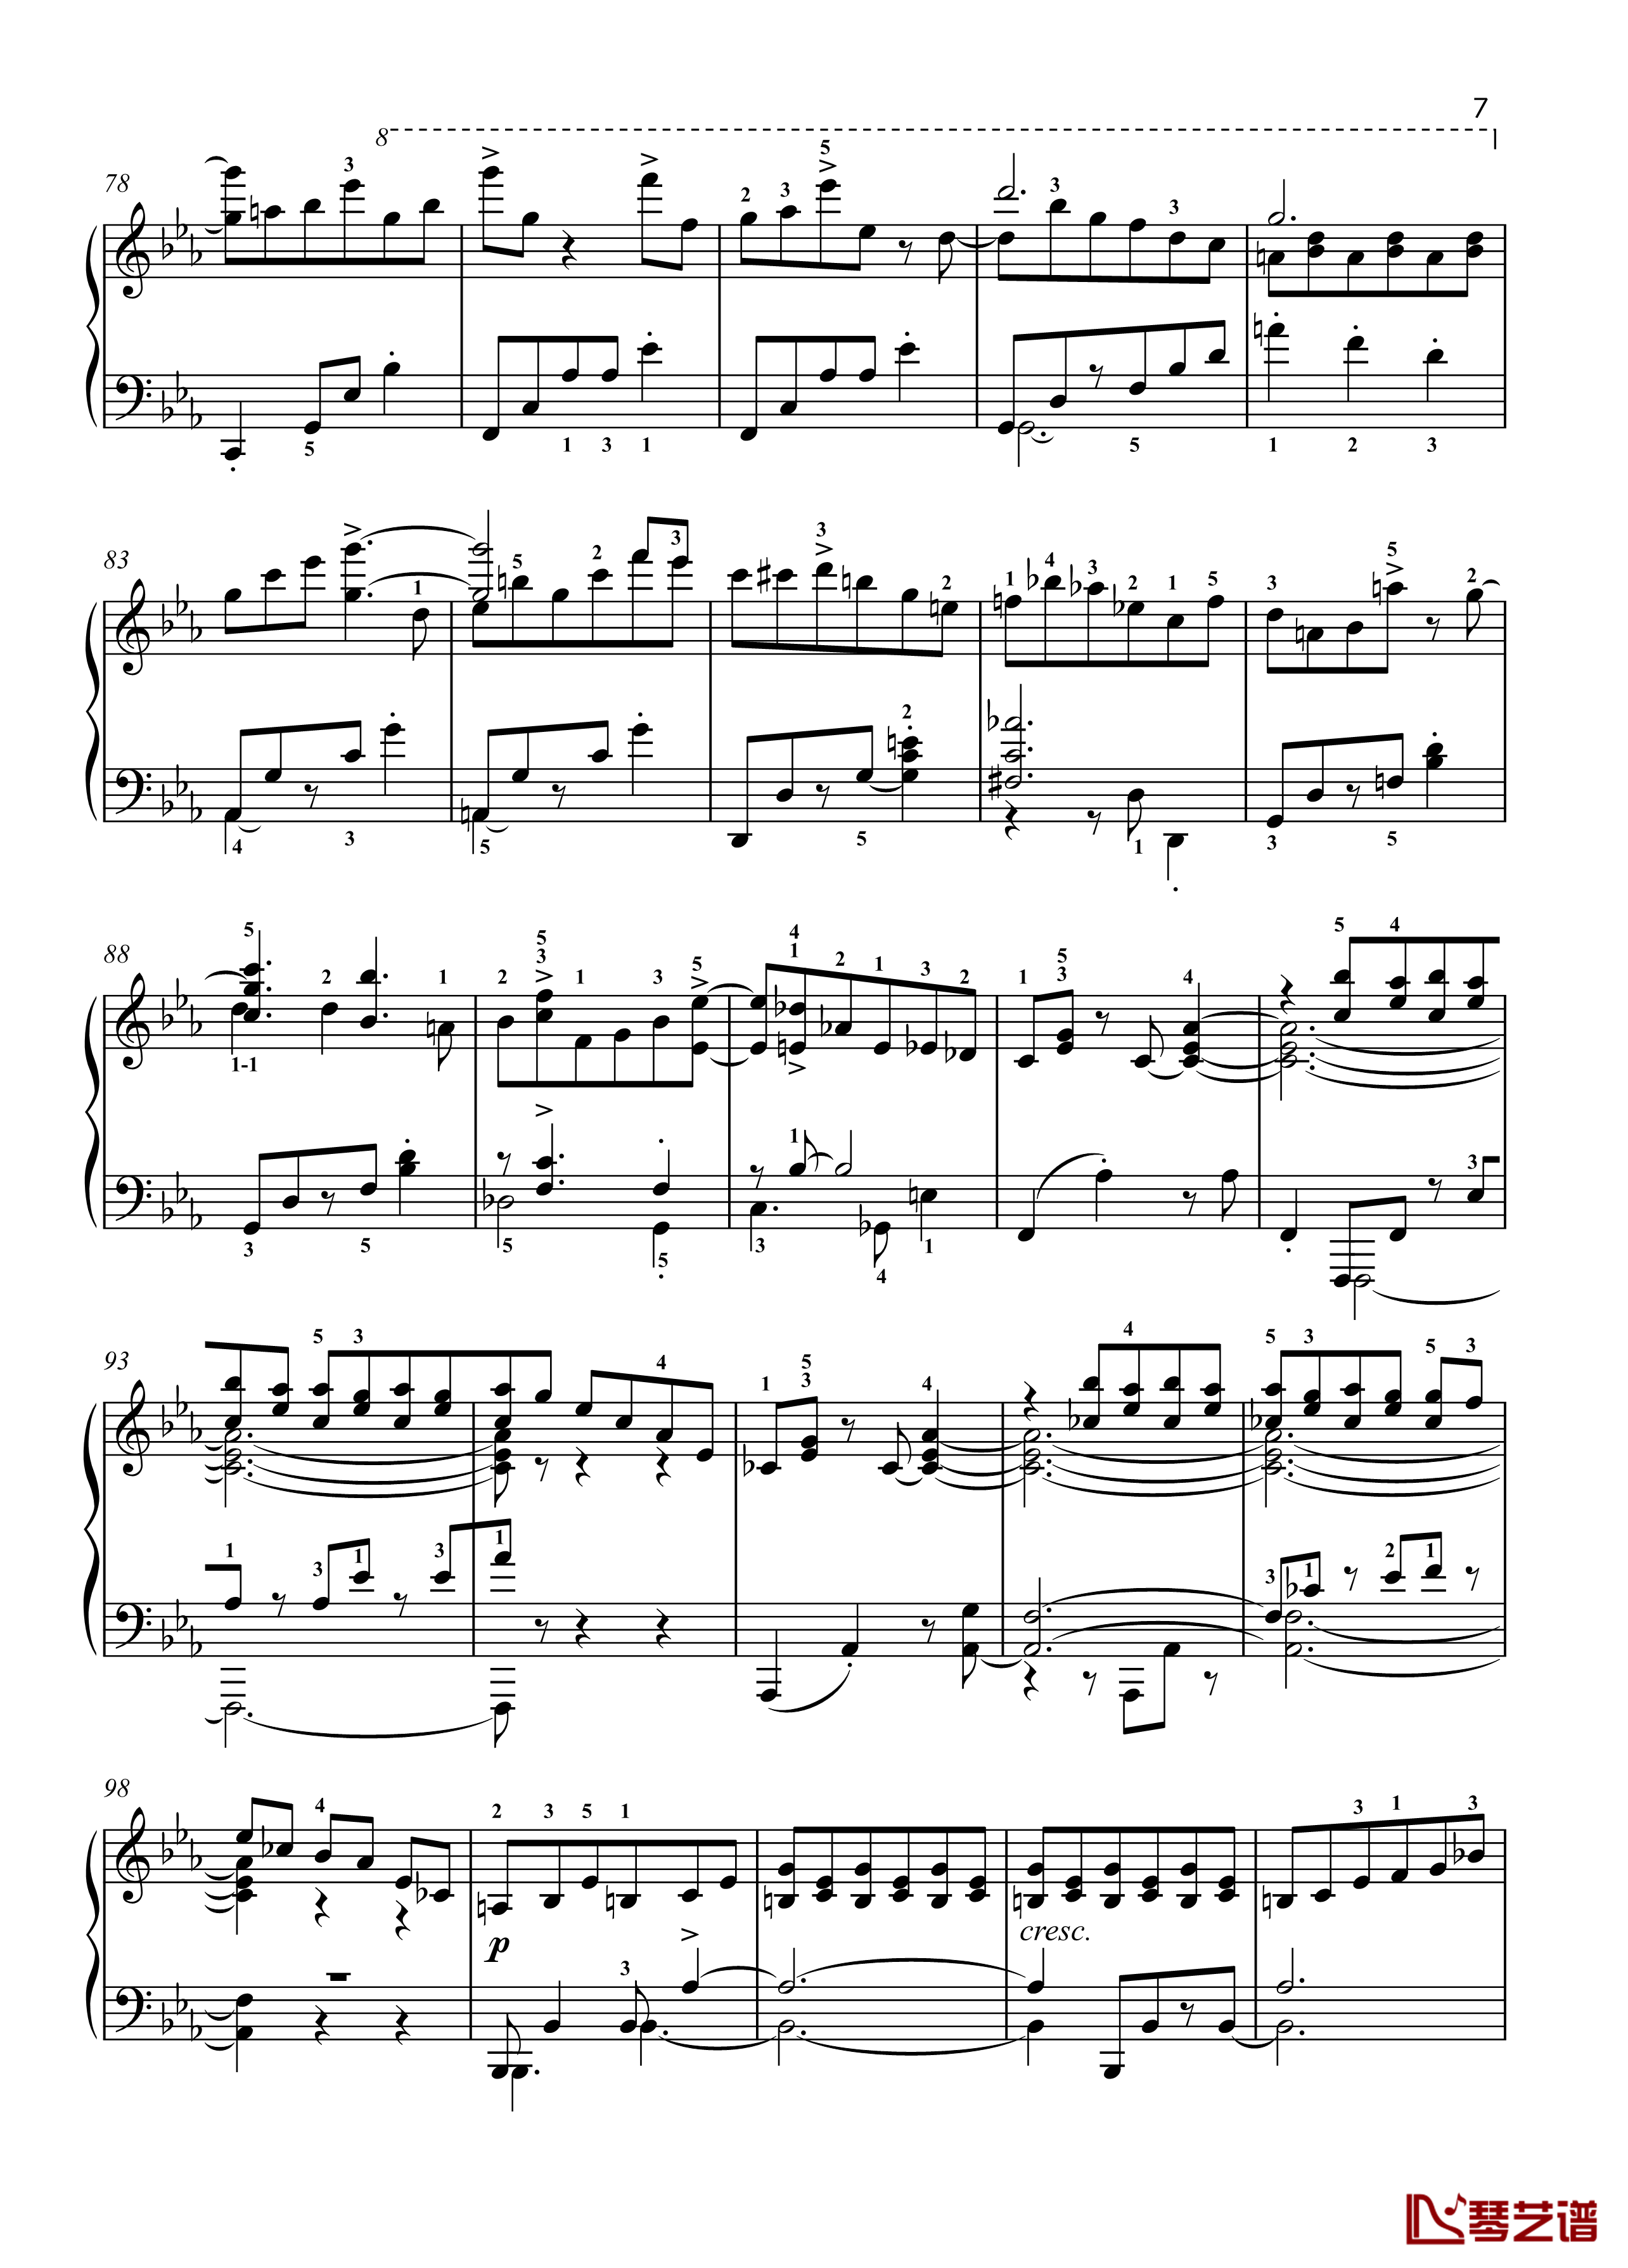 No. 2. Dream. Moderato钢琴谱-带指法- 八首音乐会练习曲 Eight Concert ?tudes Op 40 -爵士-尼古拉·凯帕斯汀7